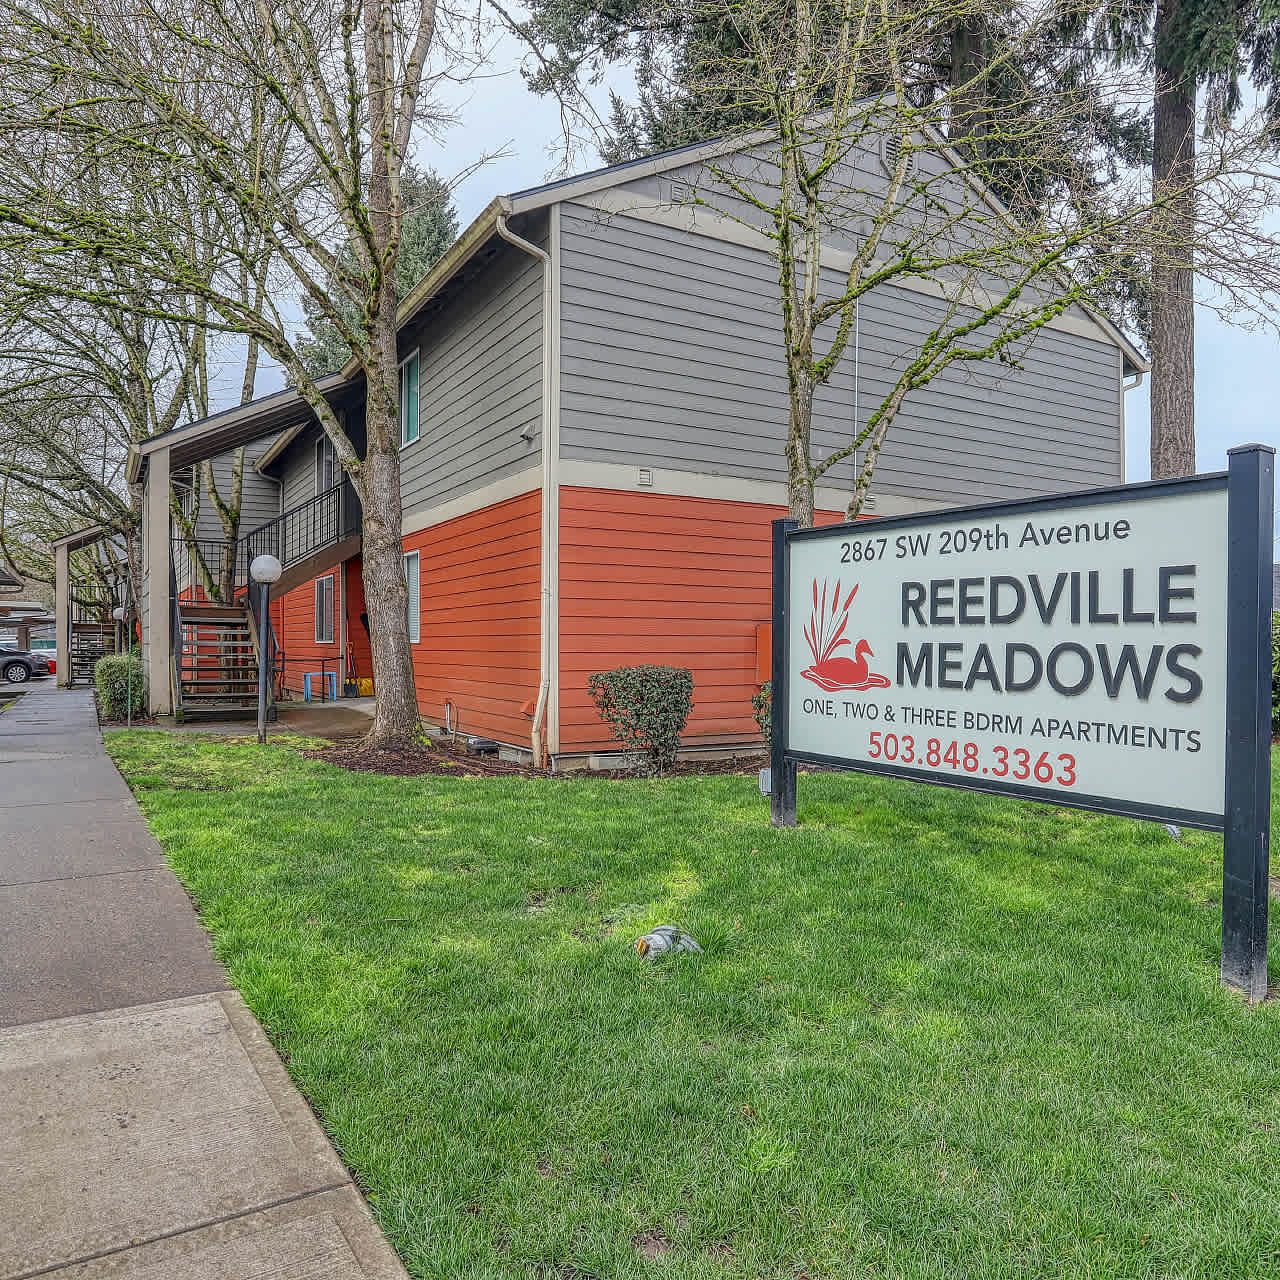 Reedville Meadows